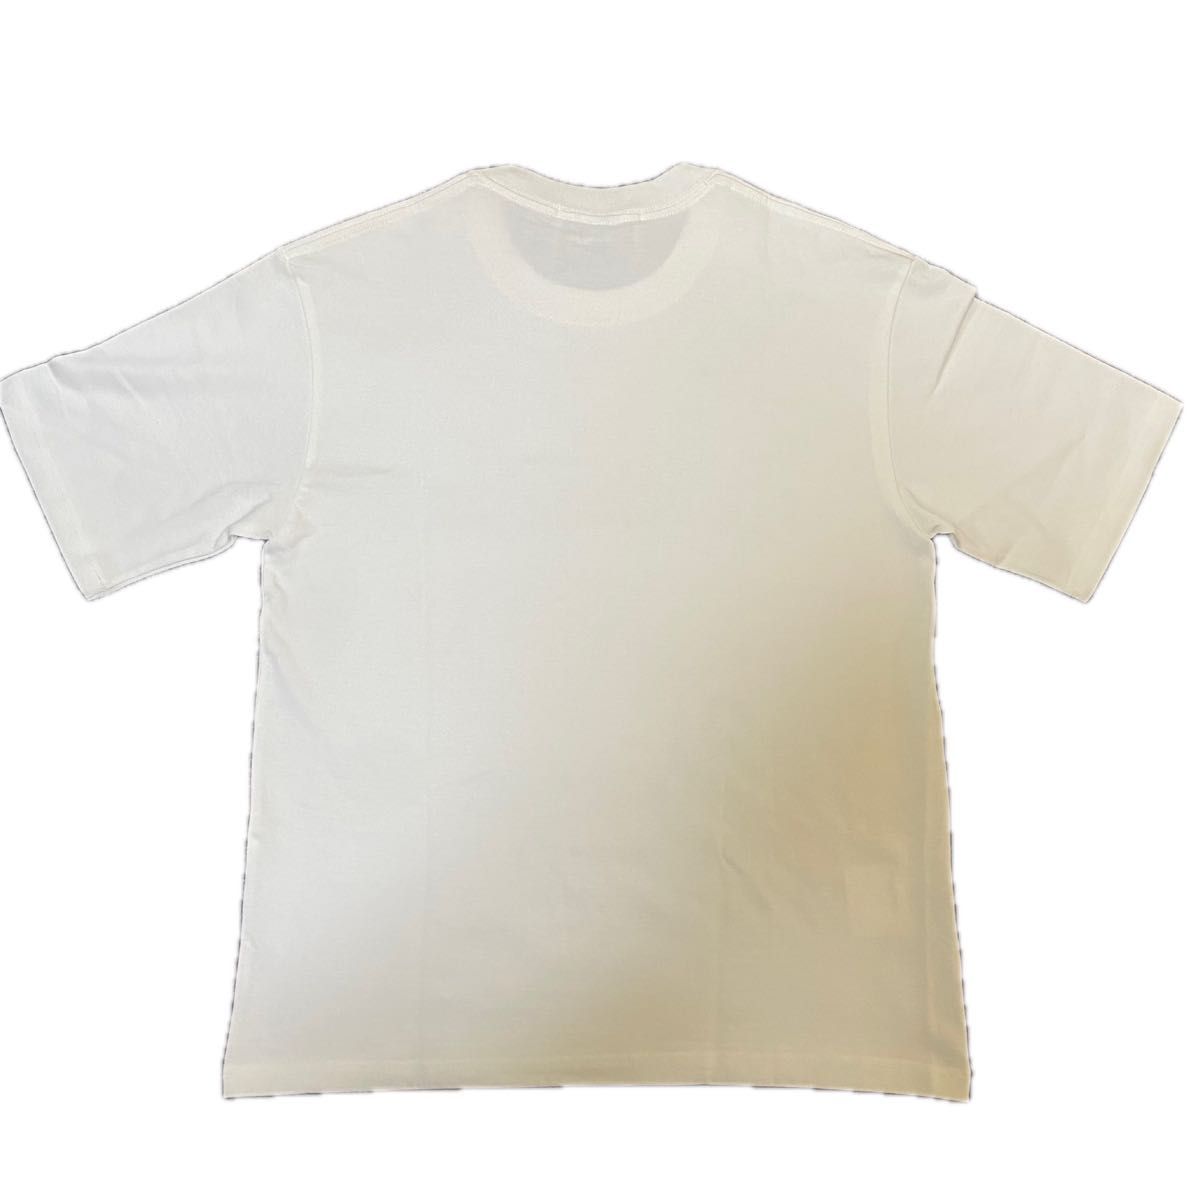 JIL SANDER Tシャツ ホワイト M